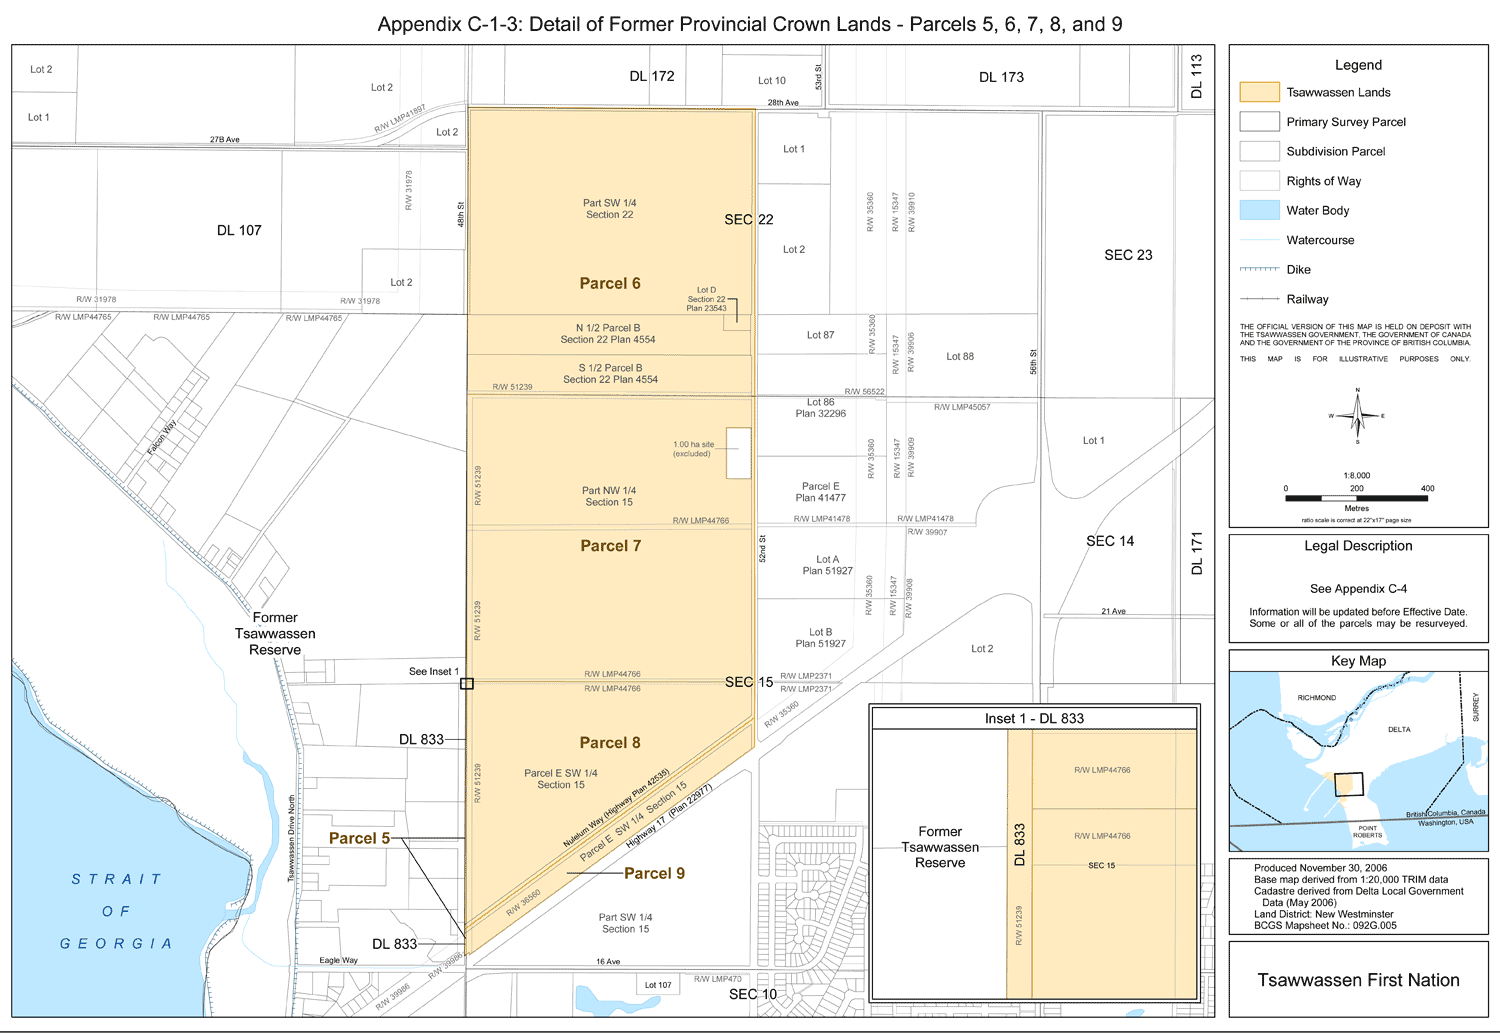 Appendix C-1-3: Detail of Former Provincial Crown Lands - Parcels 5, 6, 7, 8, and 9